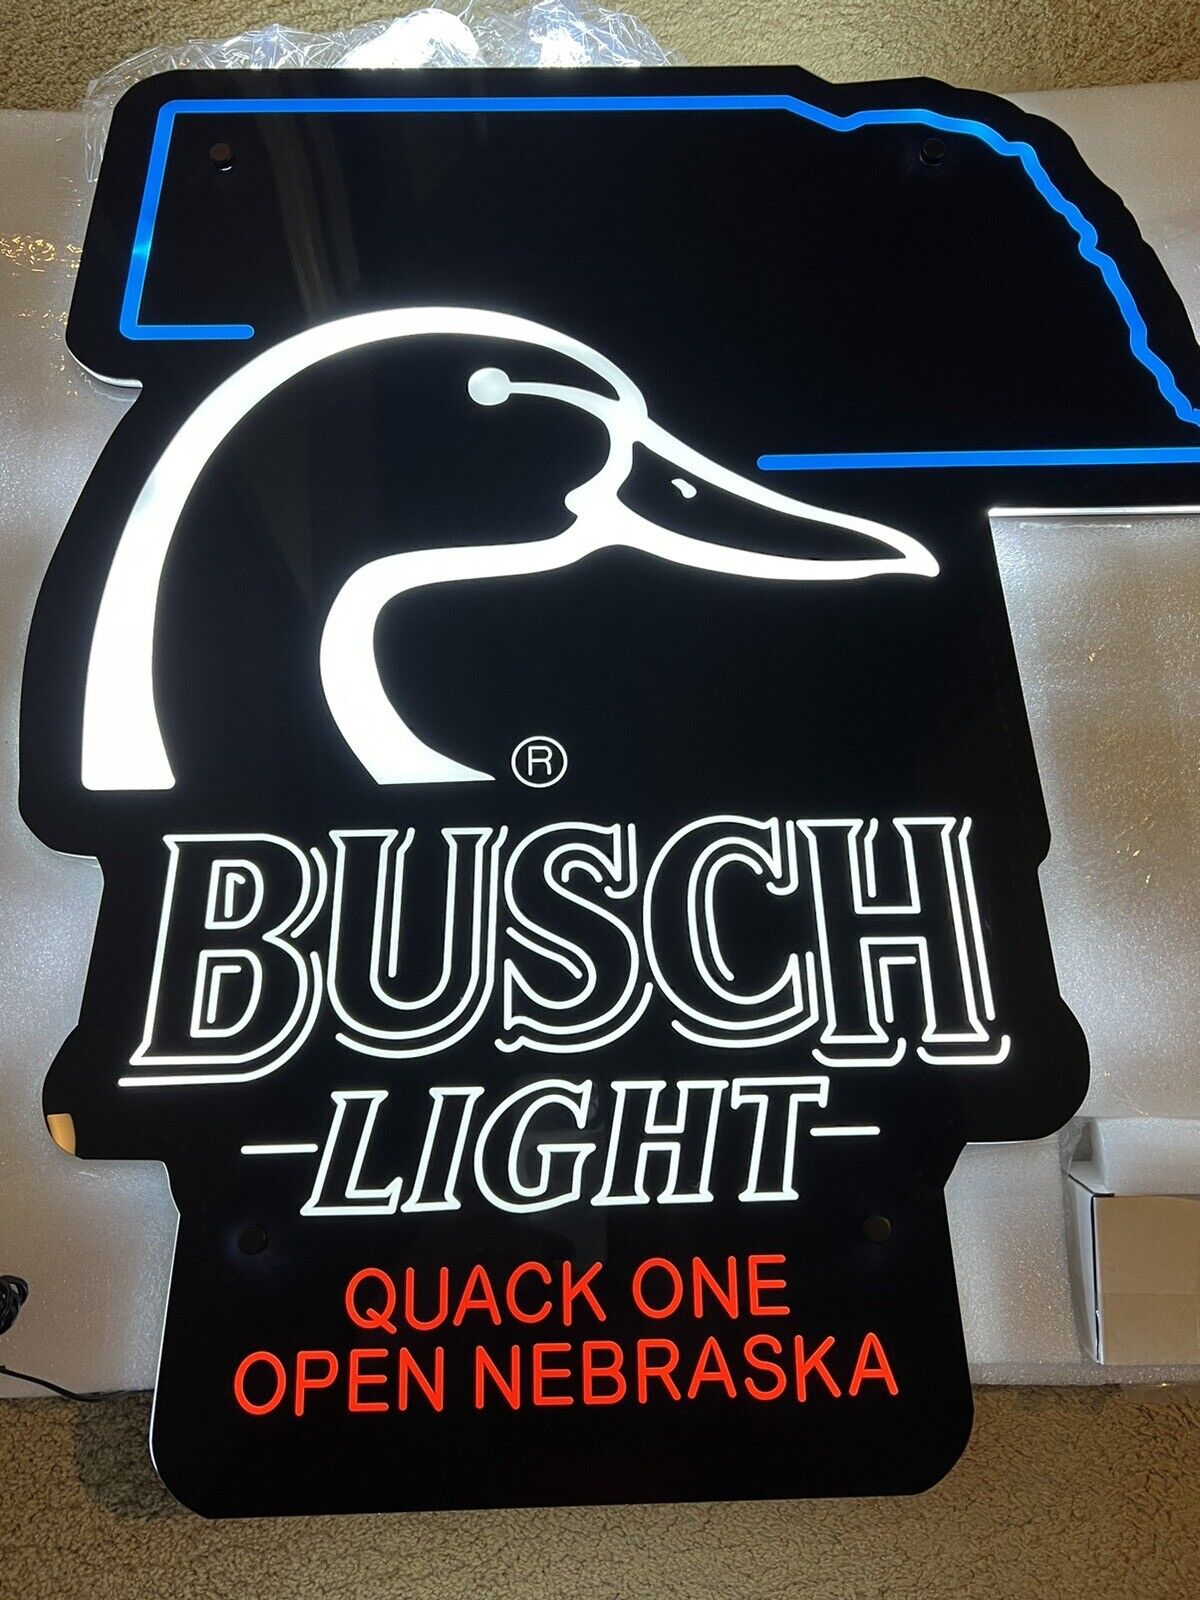 Nebraska Busch Light Ducks Unlimited Hunting LED Sign New